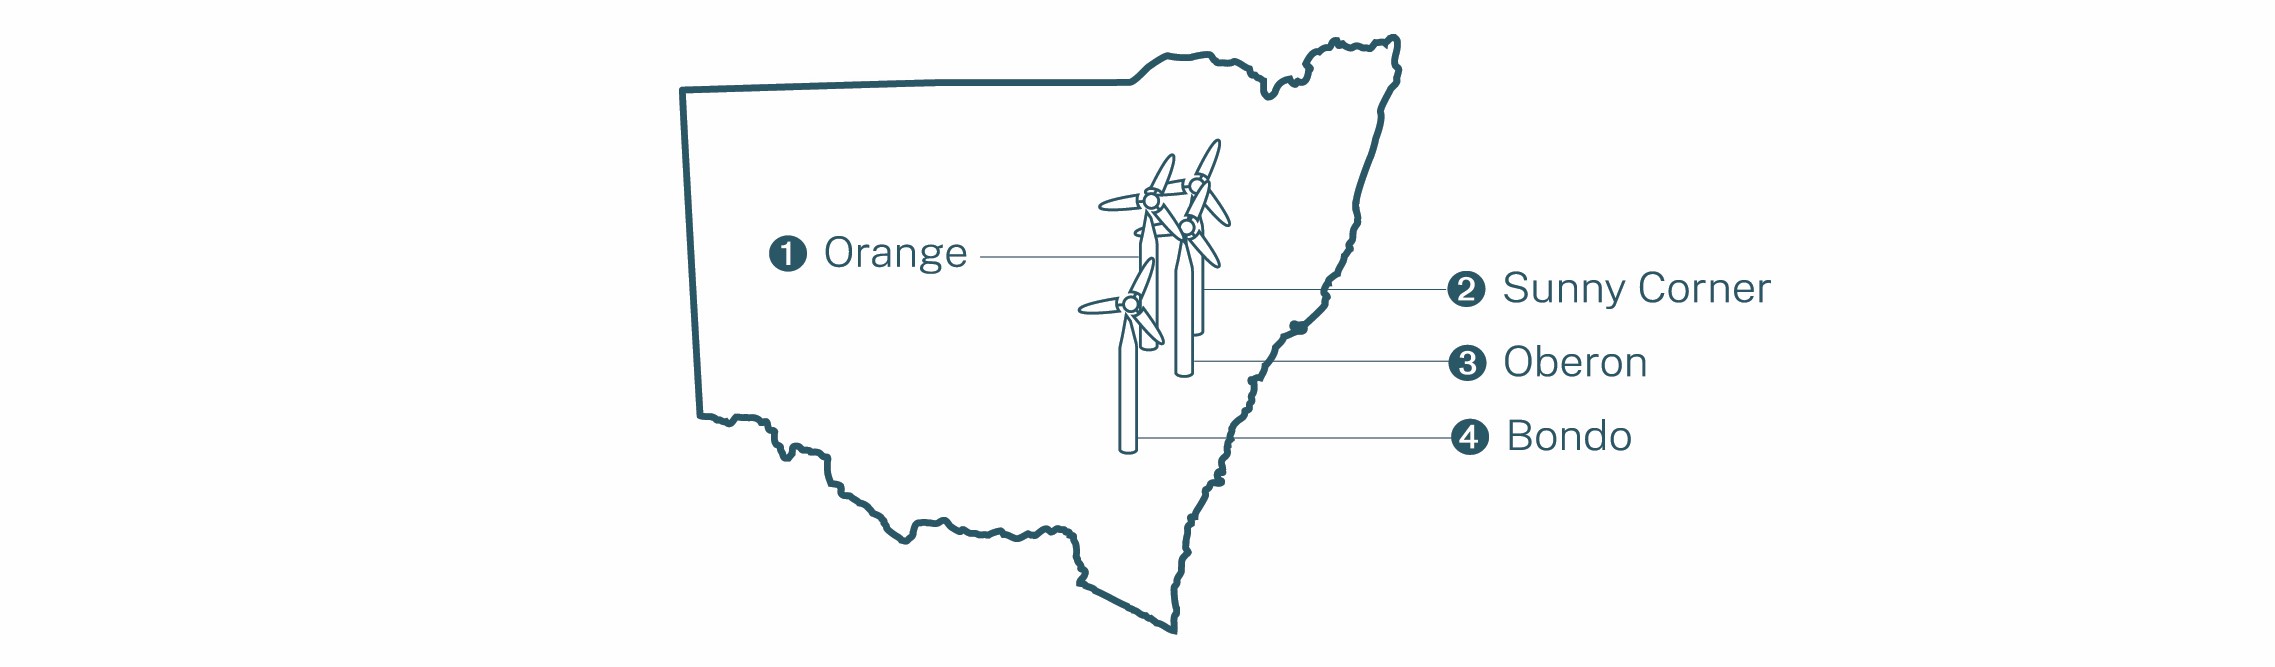 Renewable energy locations under consideration - Orange, Oberon, Sunny Corner and Bondo